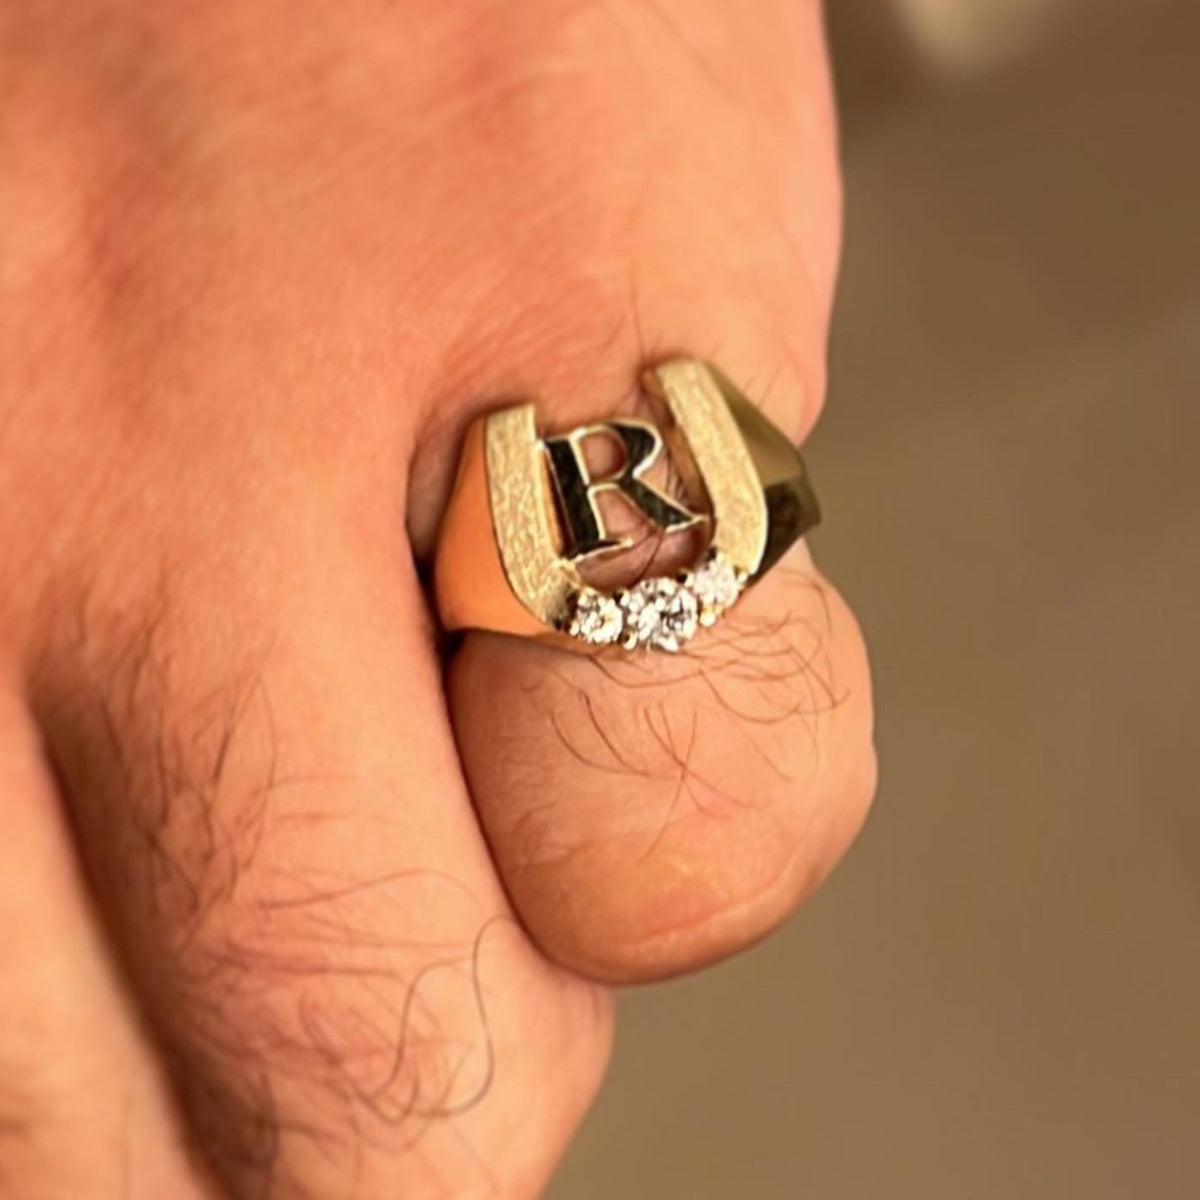 R + Diamonds Custom Design